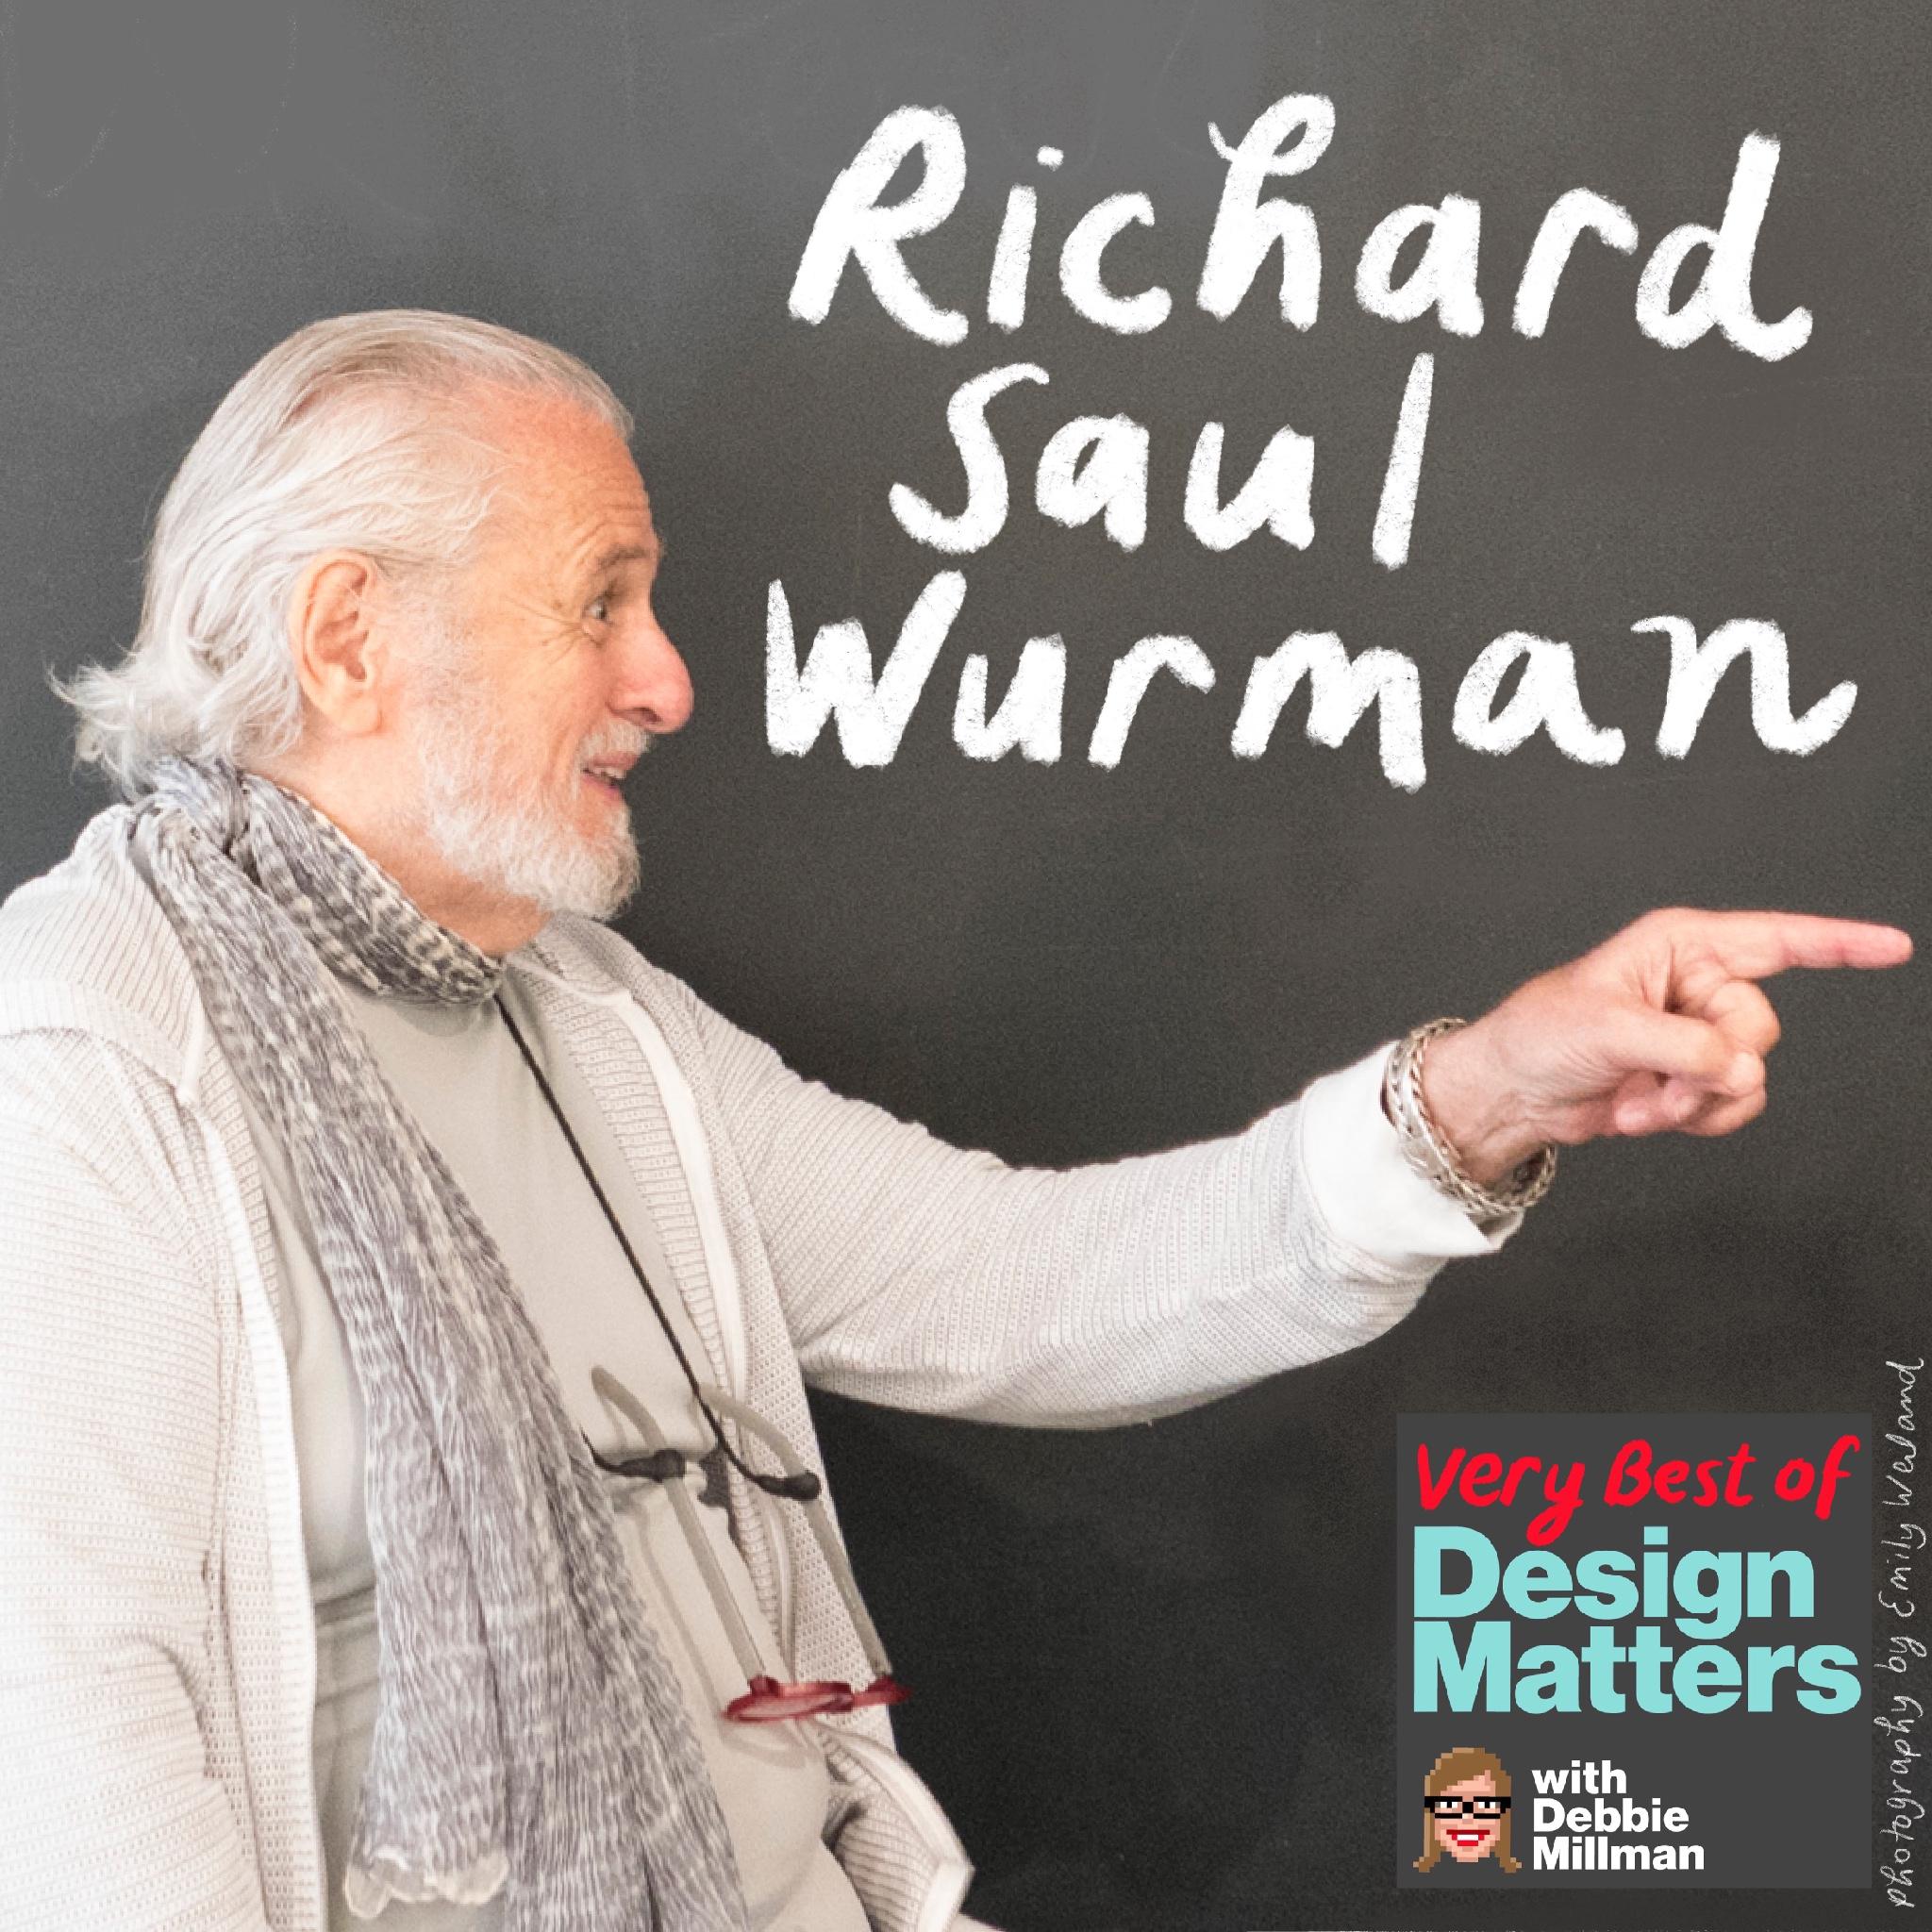 Thumbnail for "Best of Design Matters: Richard Saul Wurman".